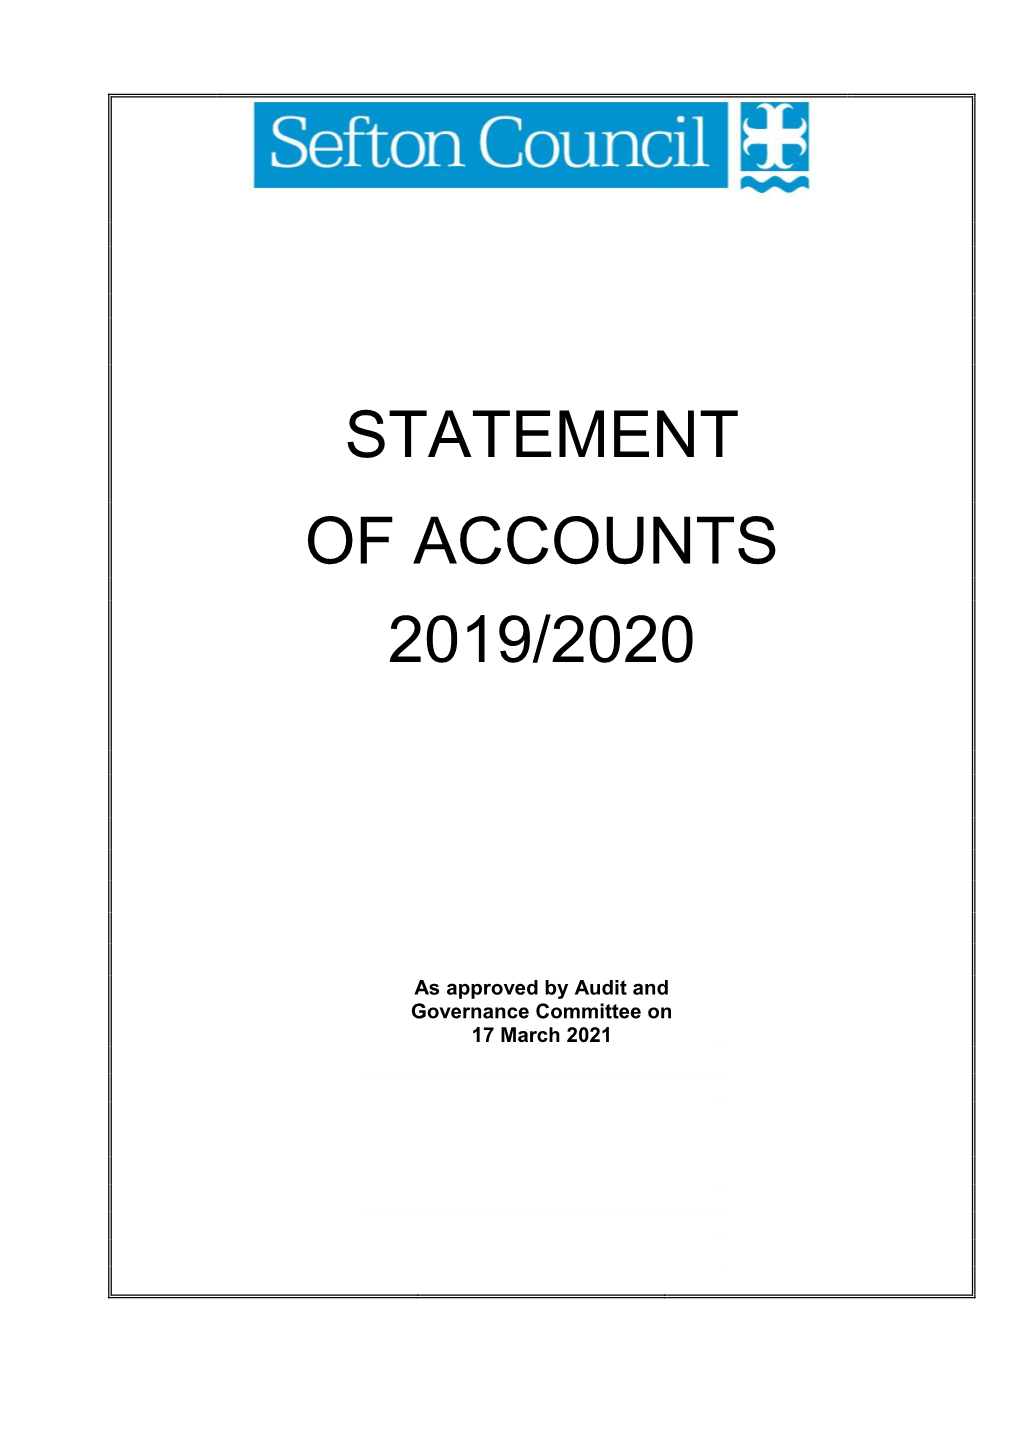 Statement of Accounts 2019/2020